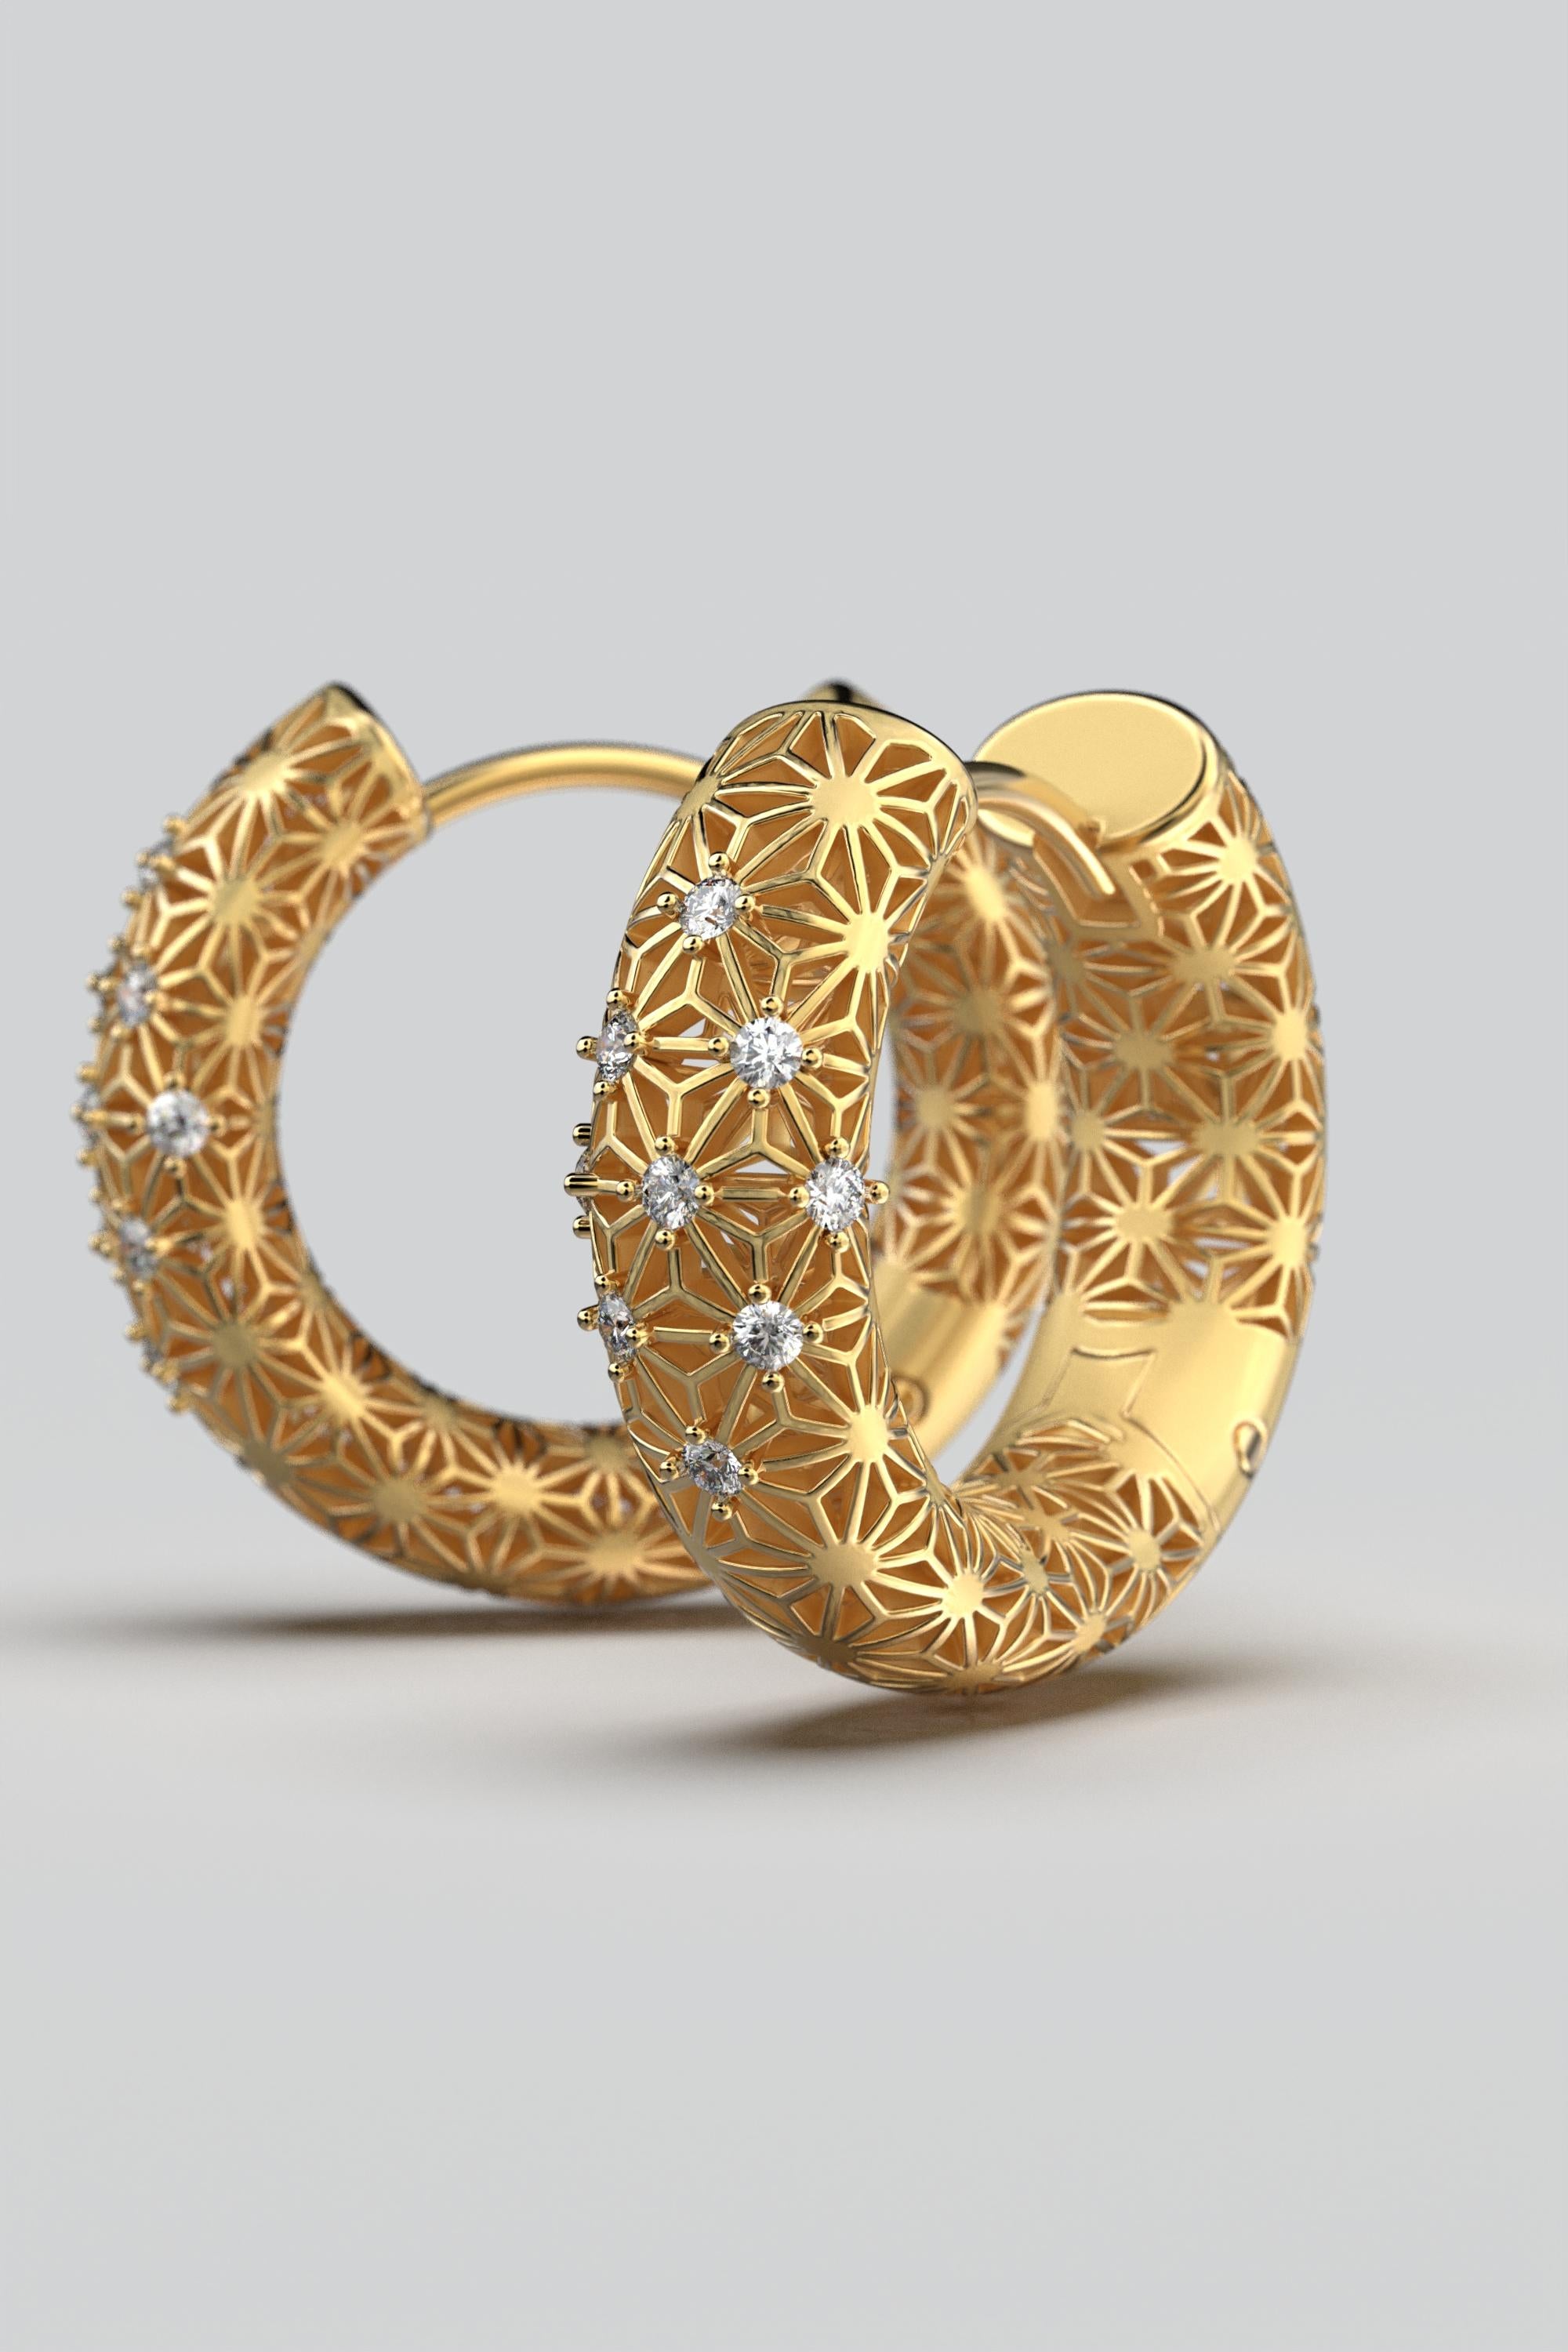  14K Italienische Gold-Diamant-Creolen-Ohrringe - Sashiko-Muster - Oltremare Gioielli (Moderne) im Angebot